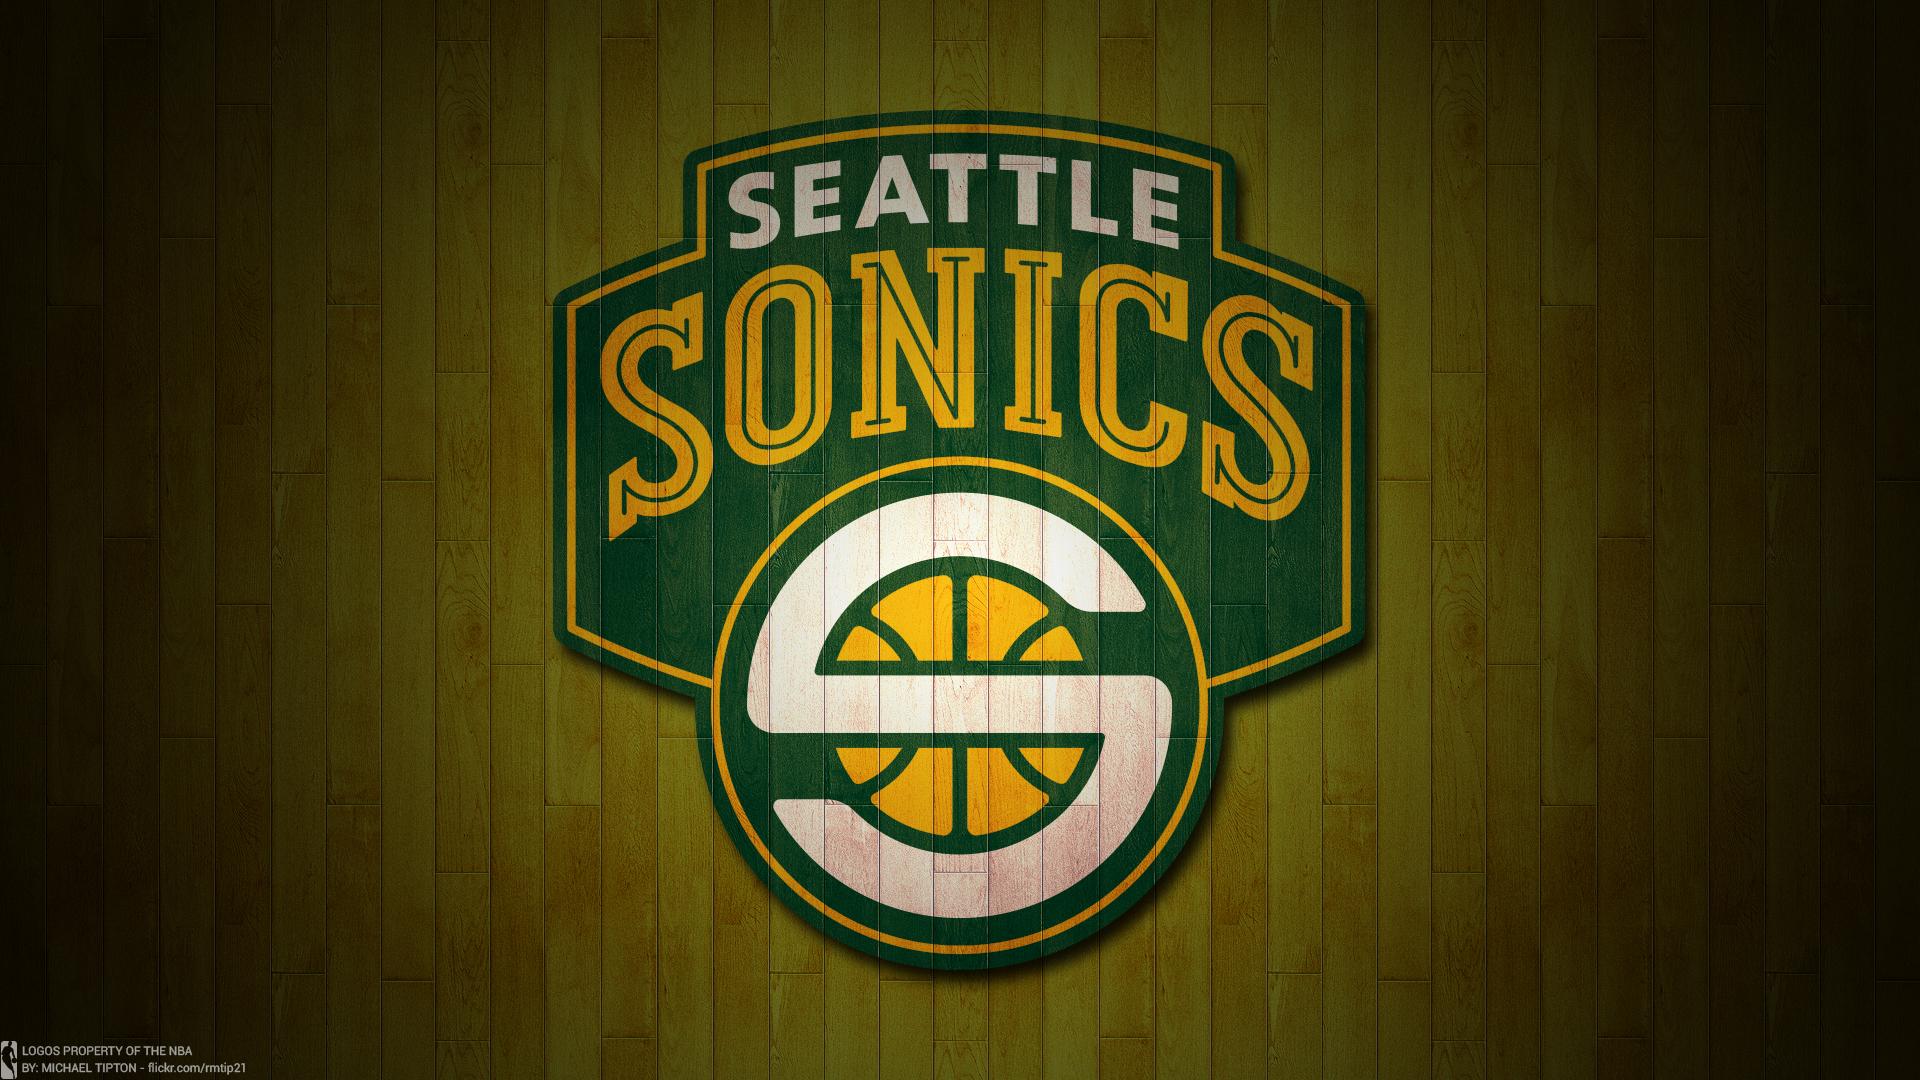 Seattle Supersonics Basketball team HD Wallpaper. Background Image